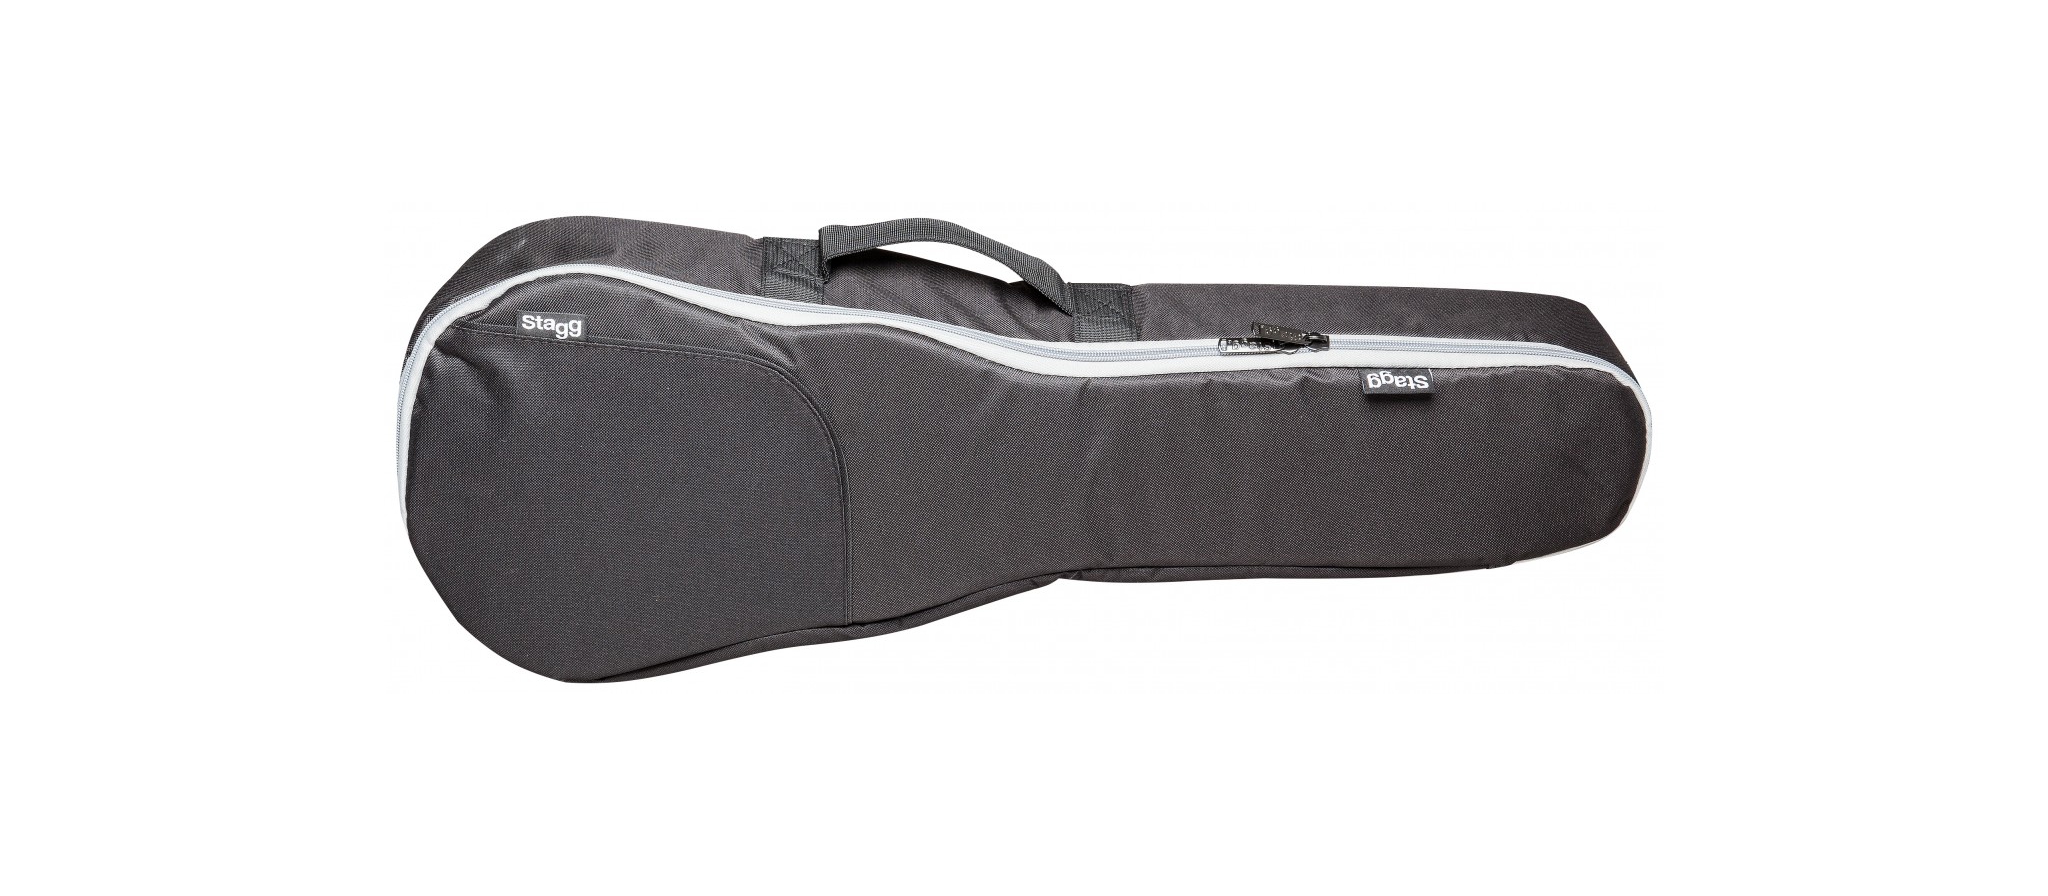 tenor　UKT　Stagg　STB-10　padding|Dijkmanmuziek　hoes　ukulele|10mm